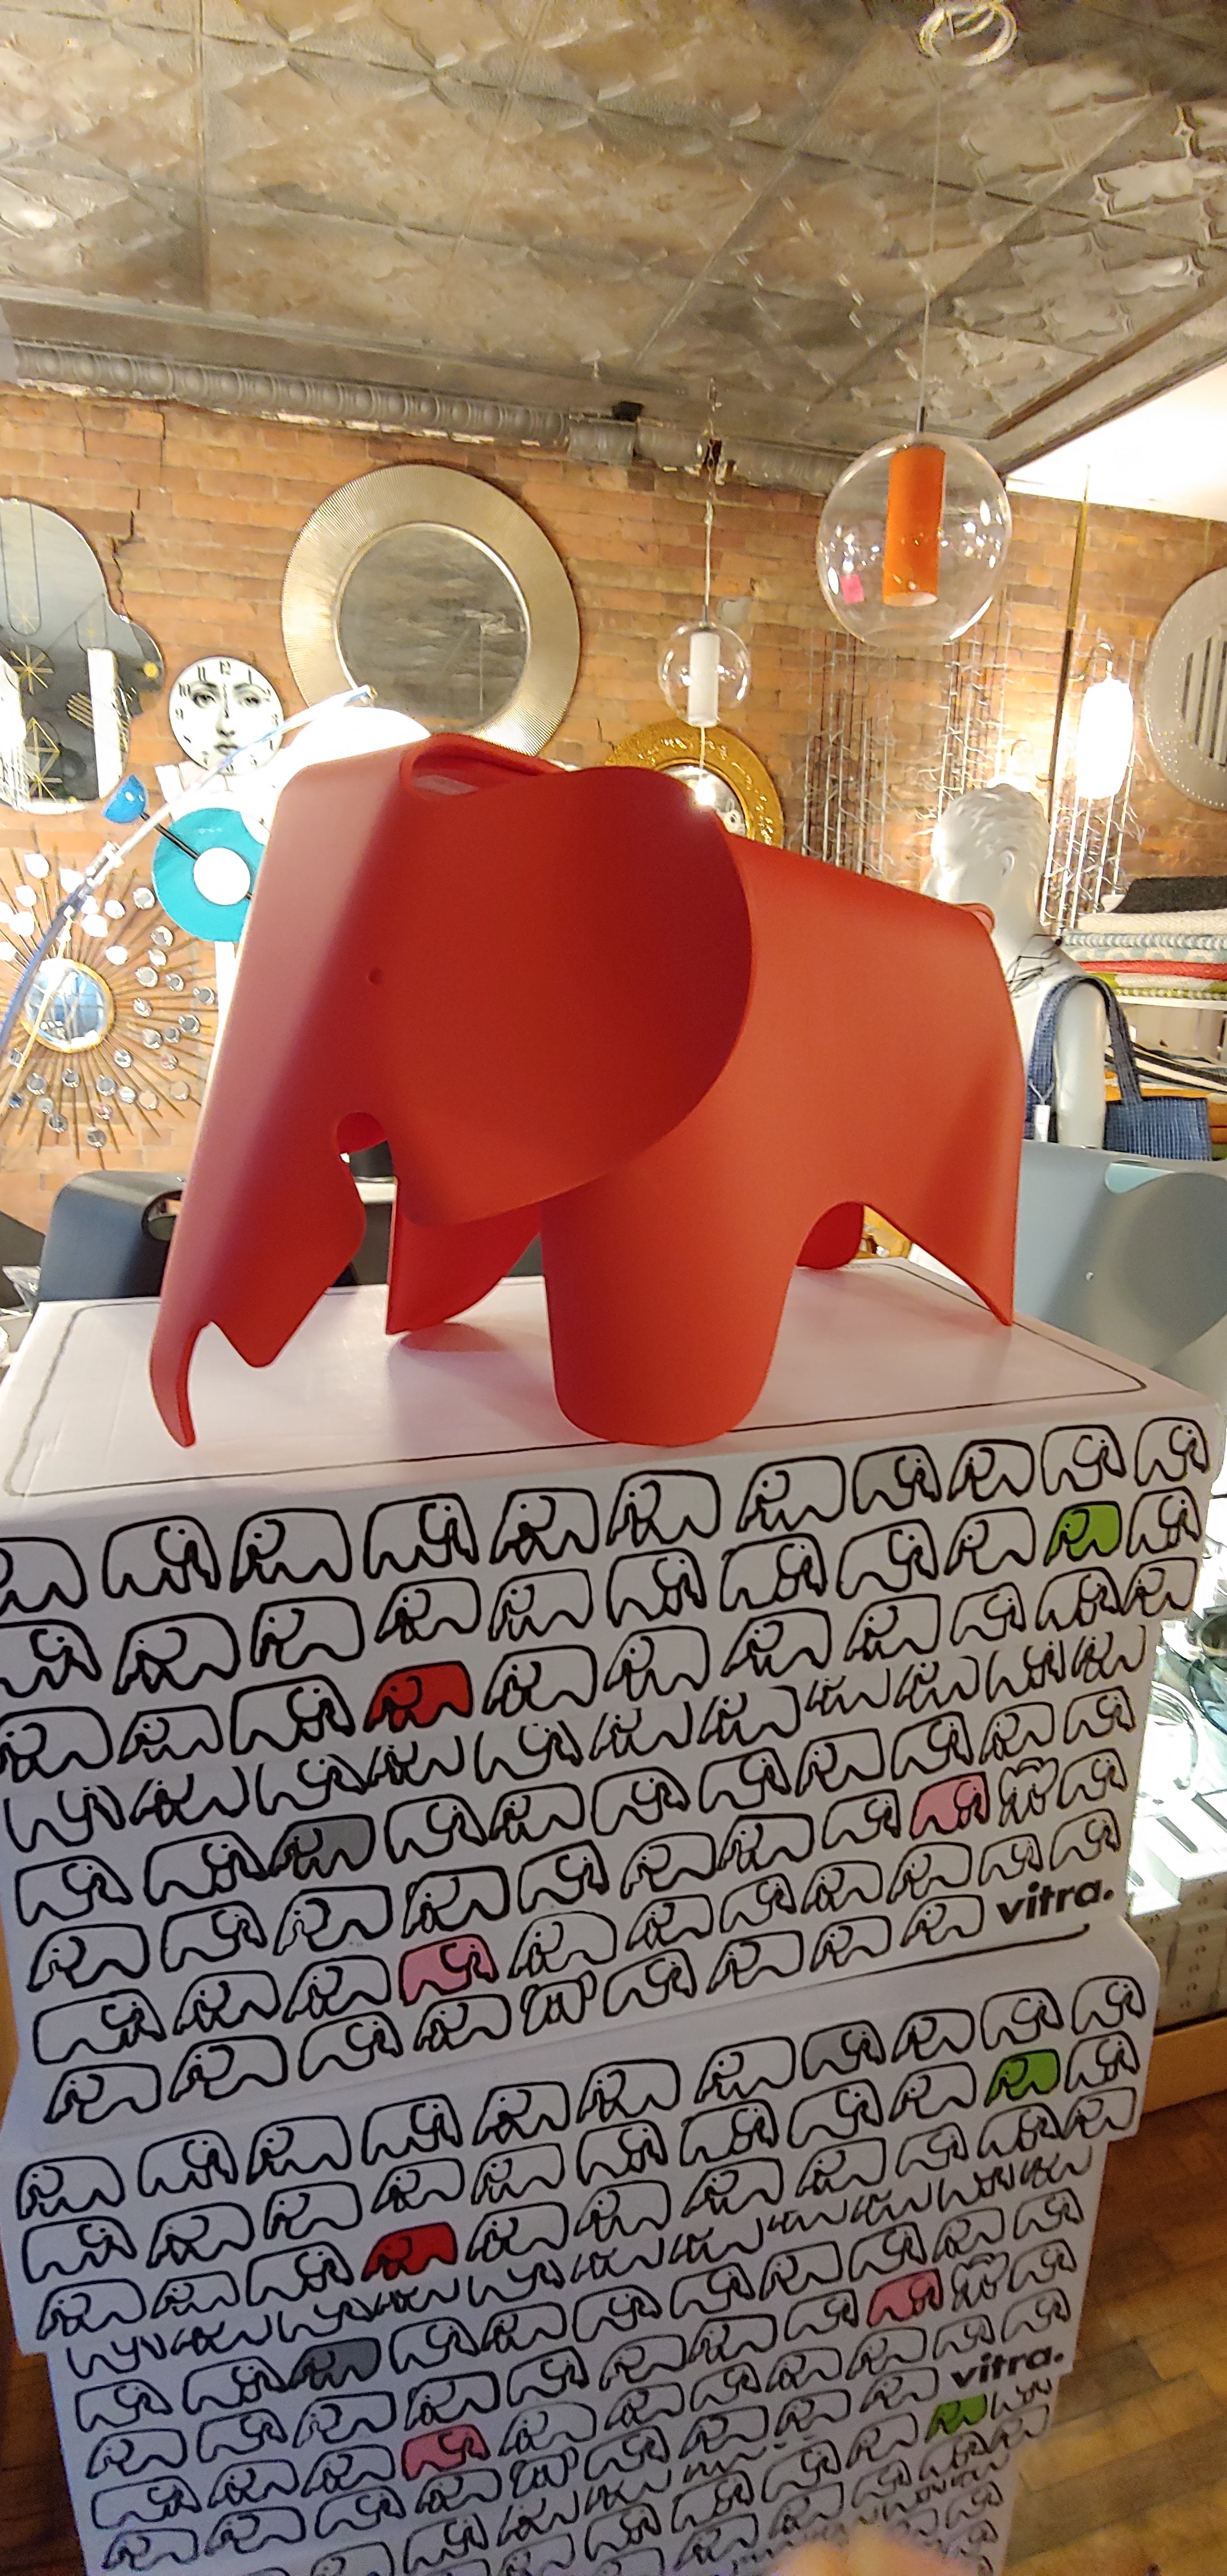 Eames elephant by Vitra